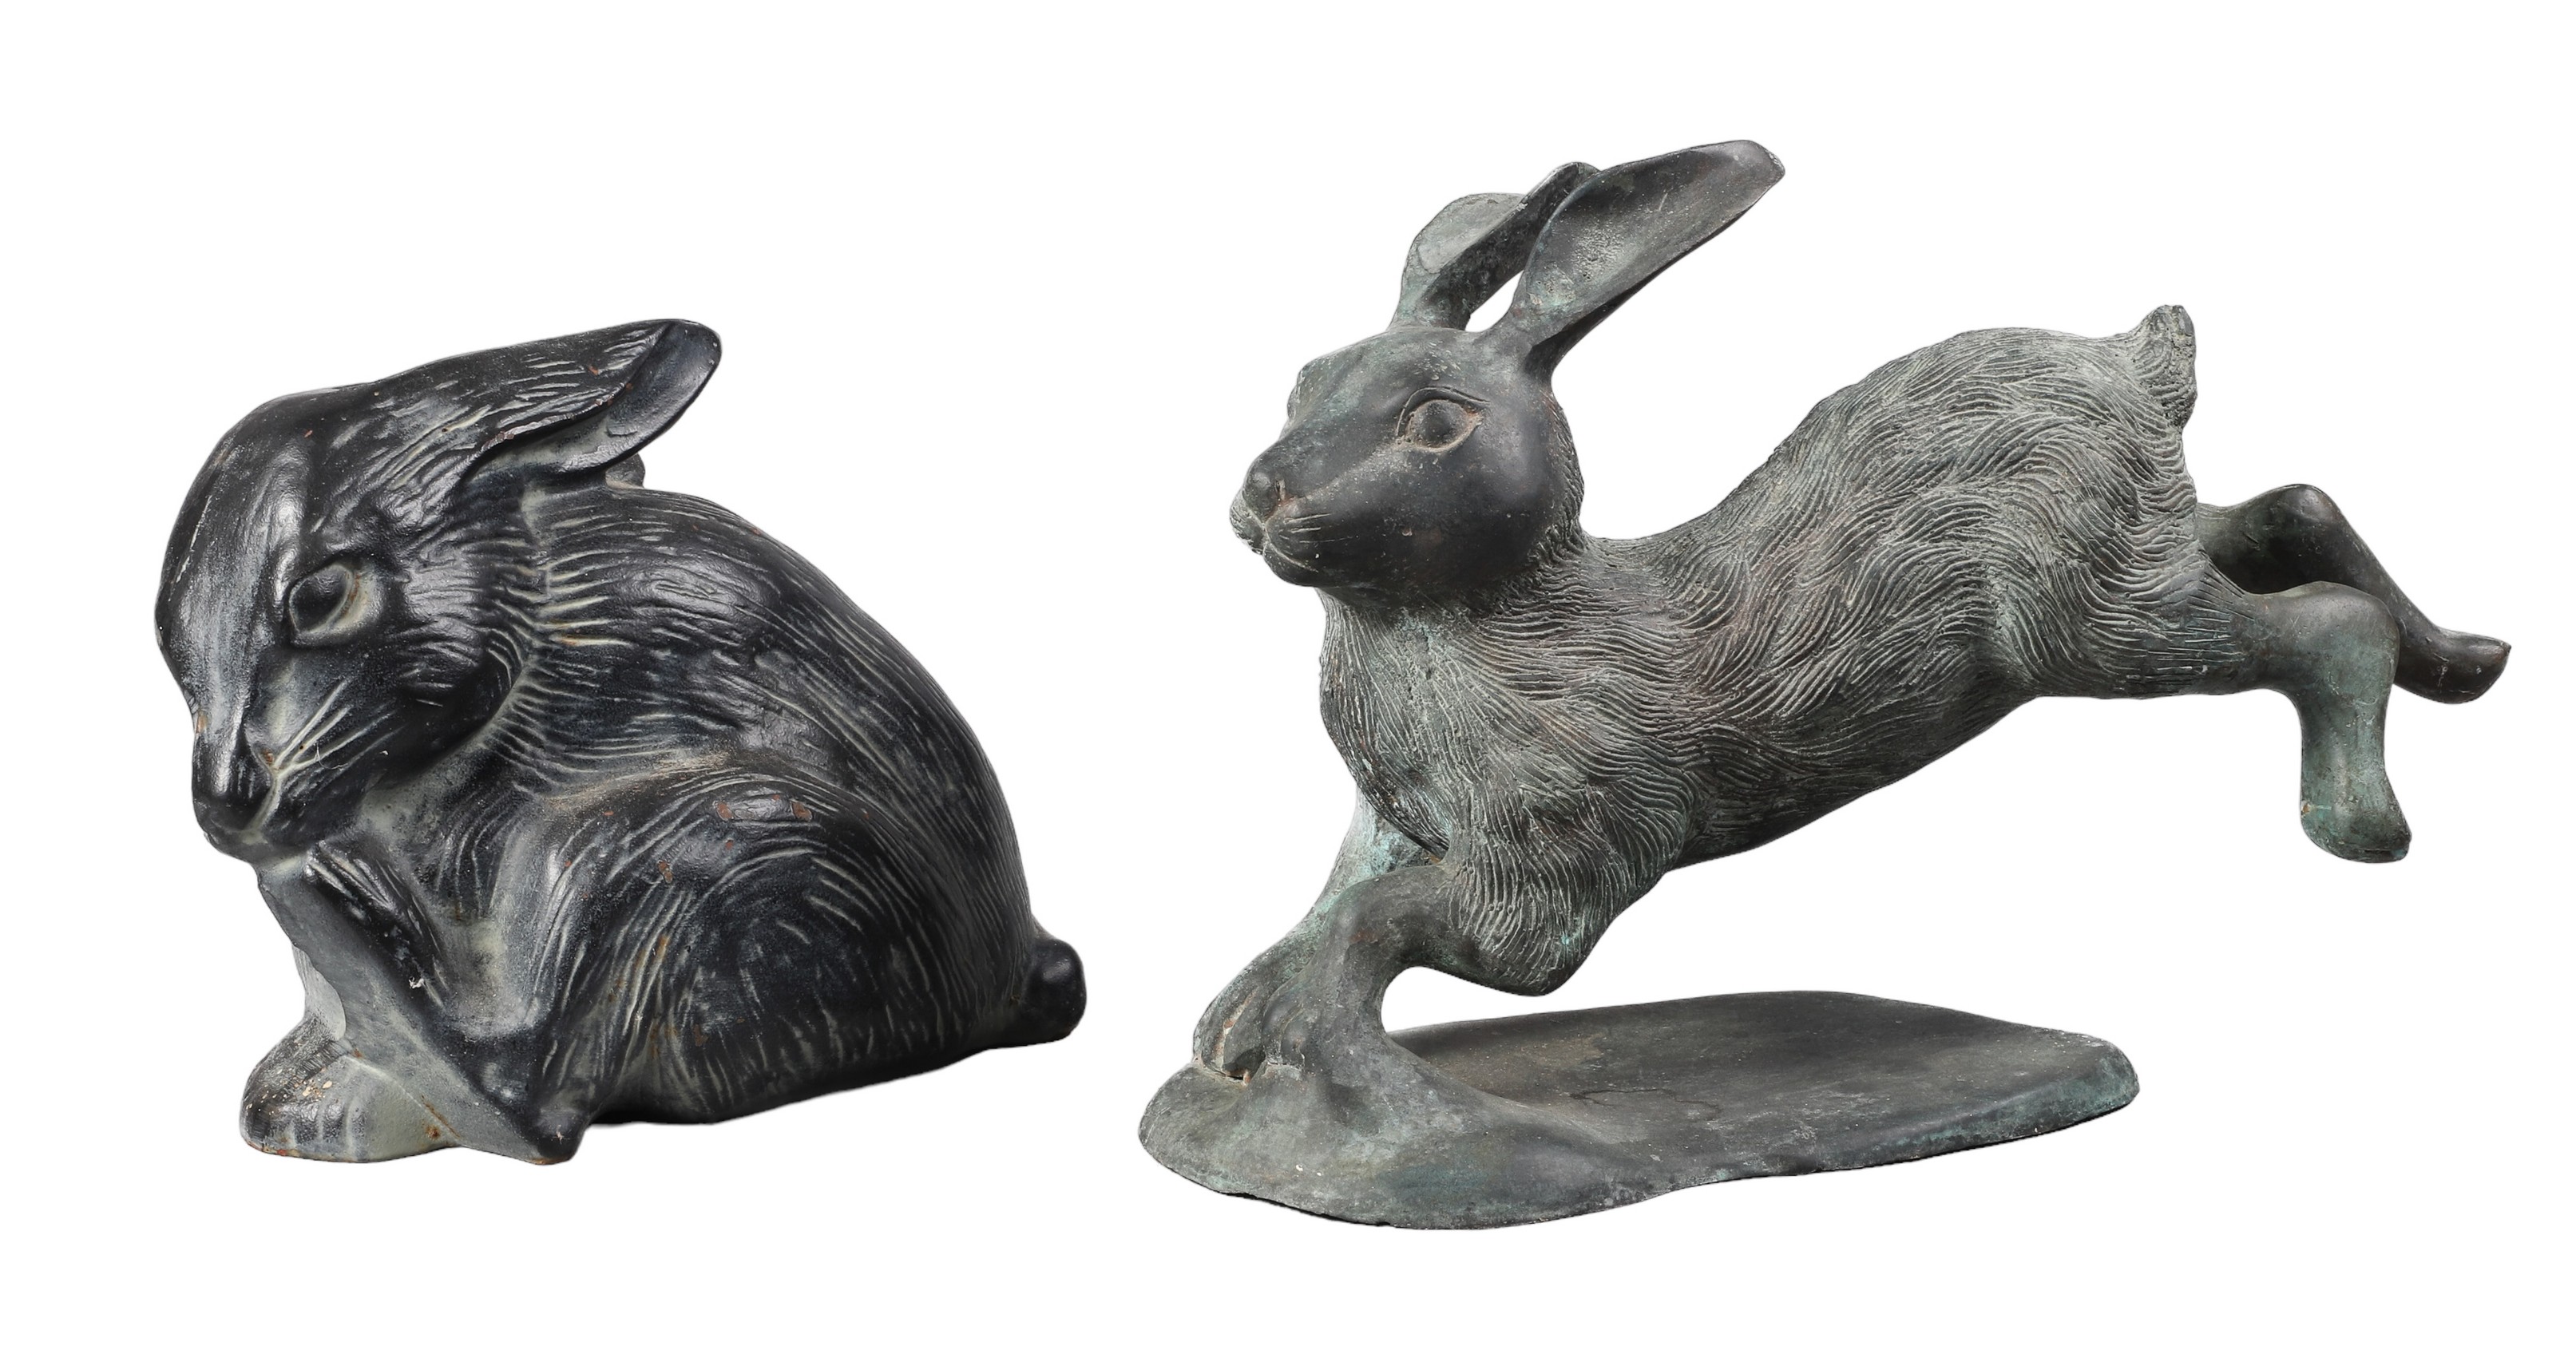 Cast iron and bronze rabbit sculptures